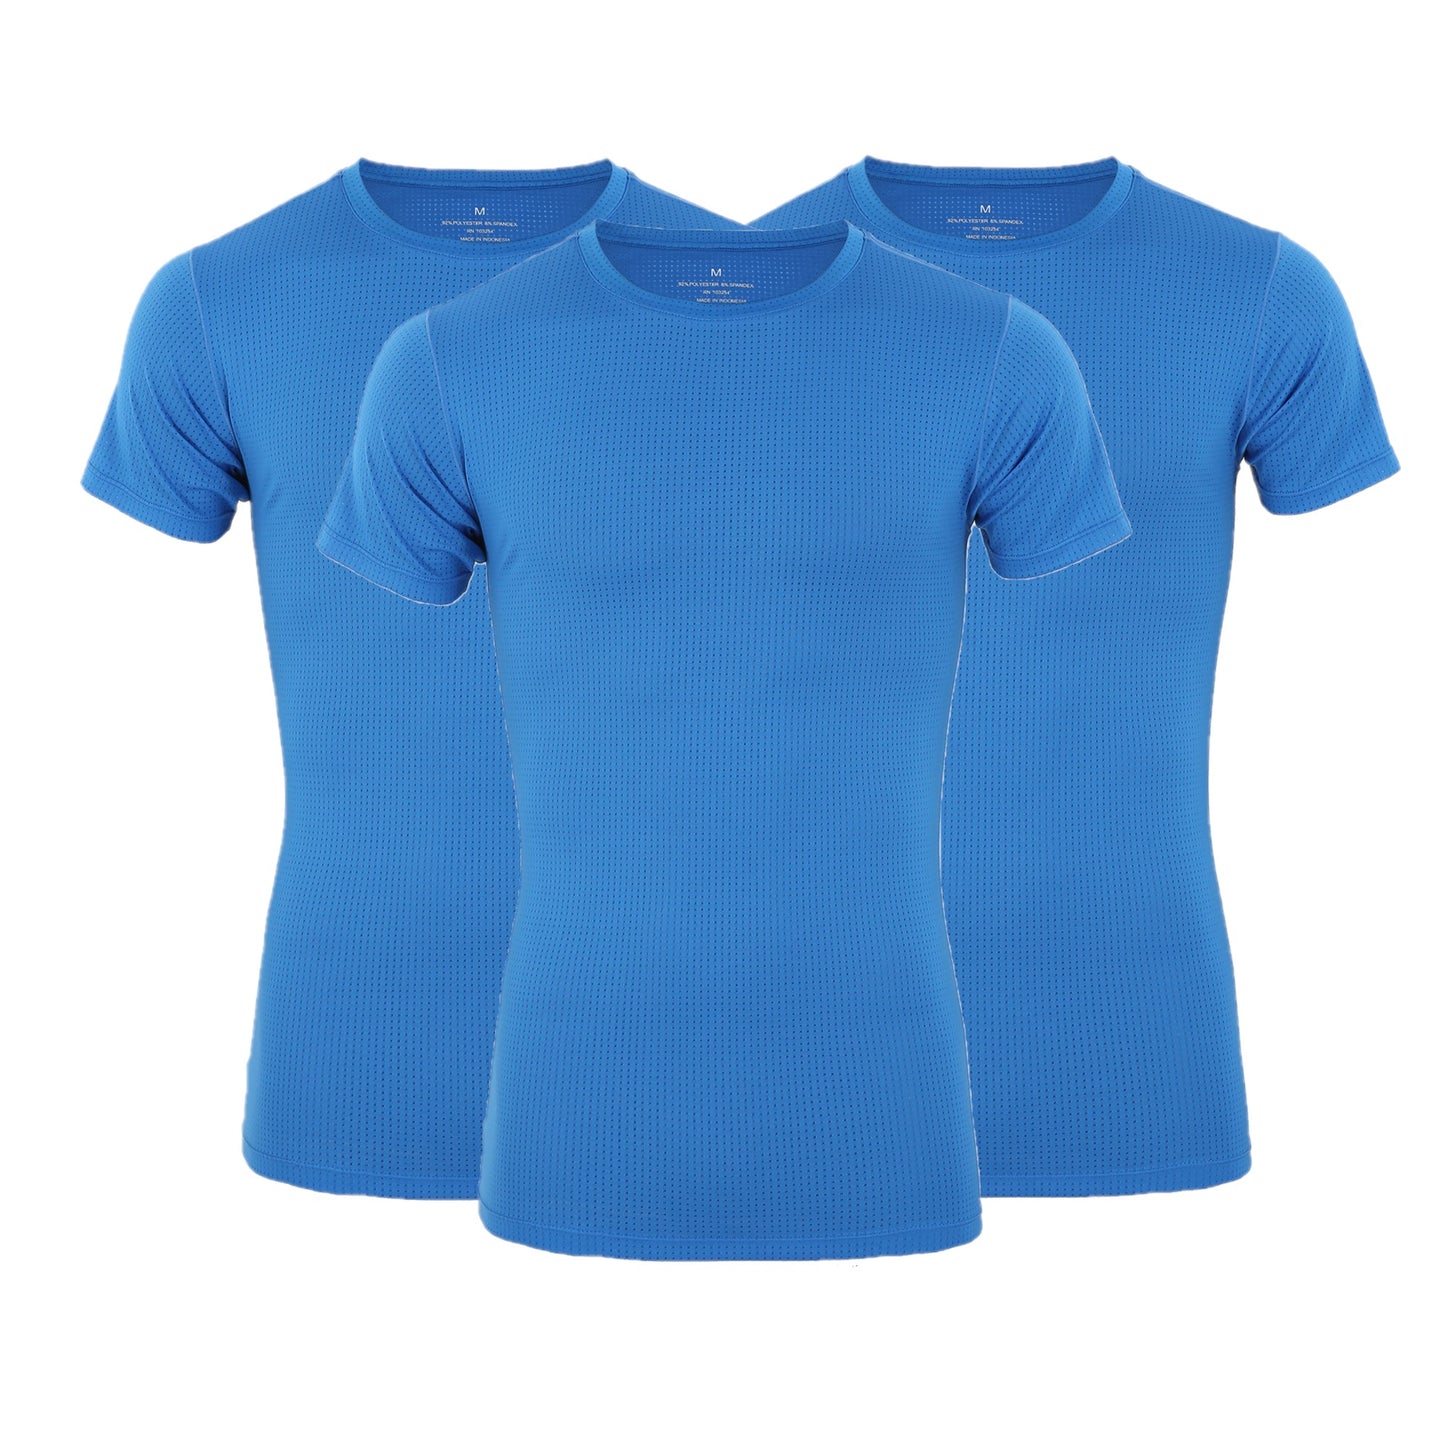 Men's Workout Short Sleeve Dry Fit Top L. Blue 3 Set